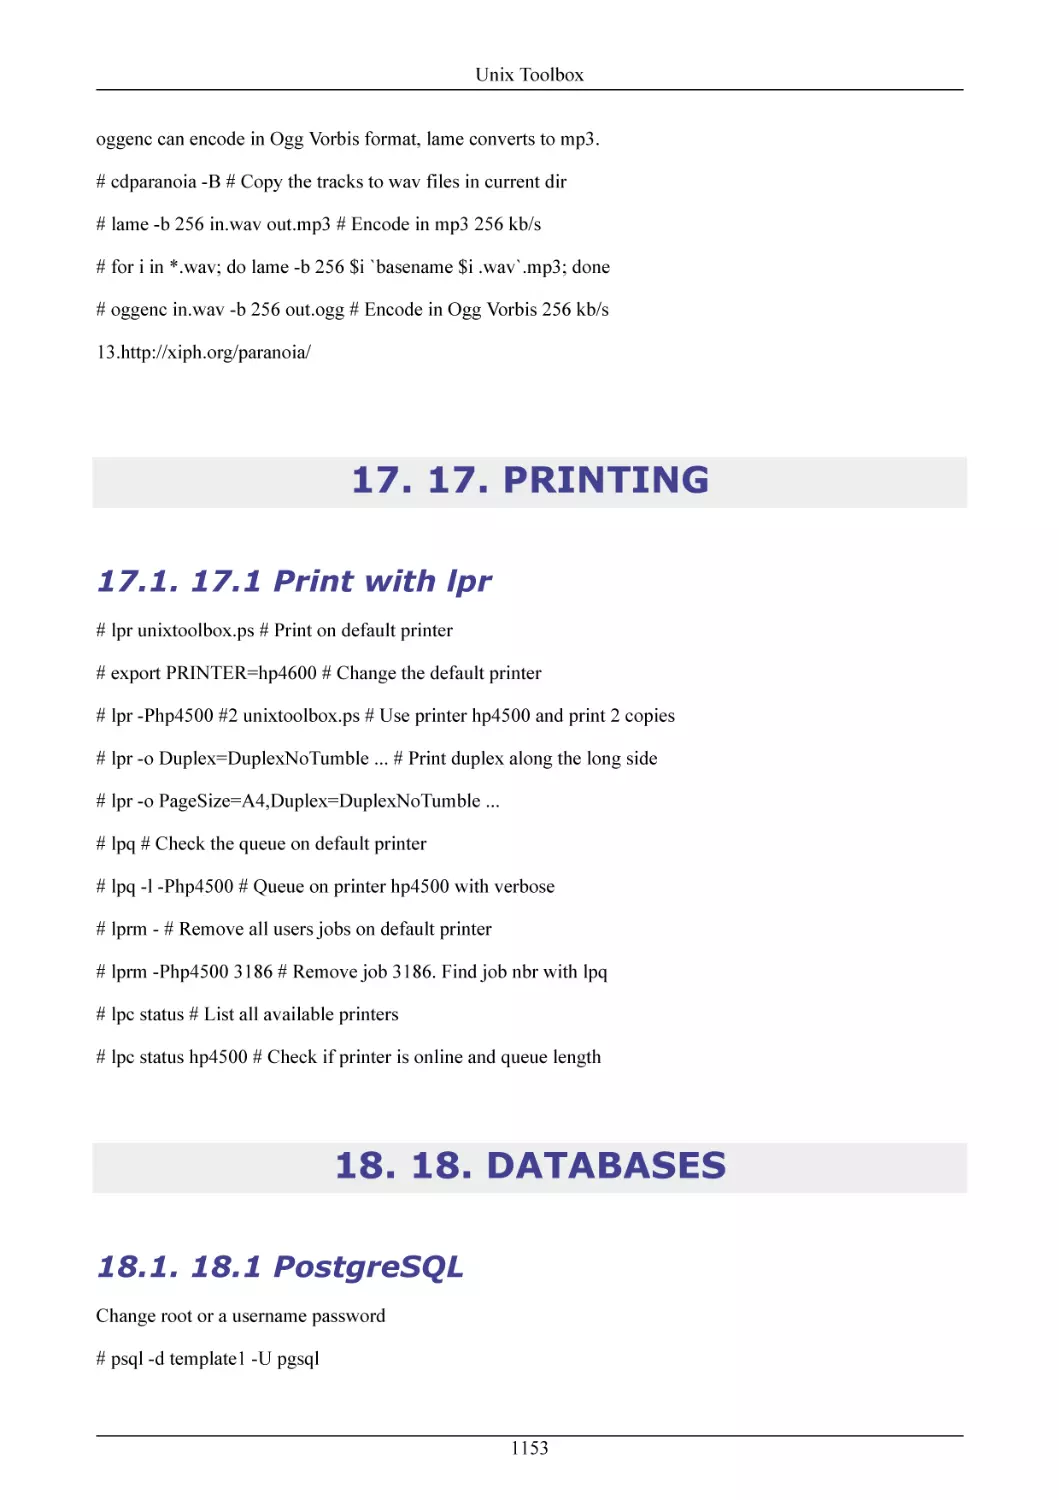 17. PRINTING
17.1 Print with lpr
18. DATABASES
18.1 PostgreSQL